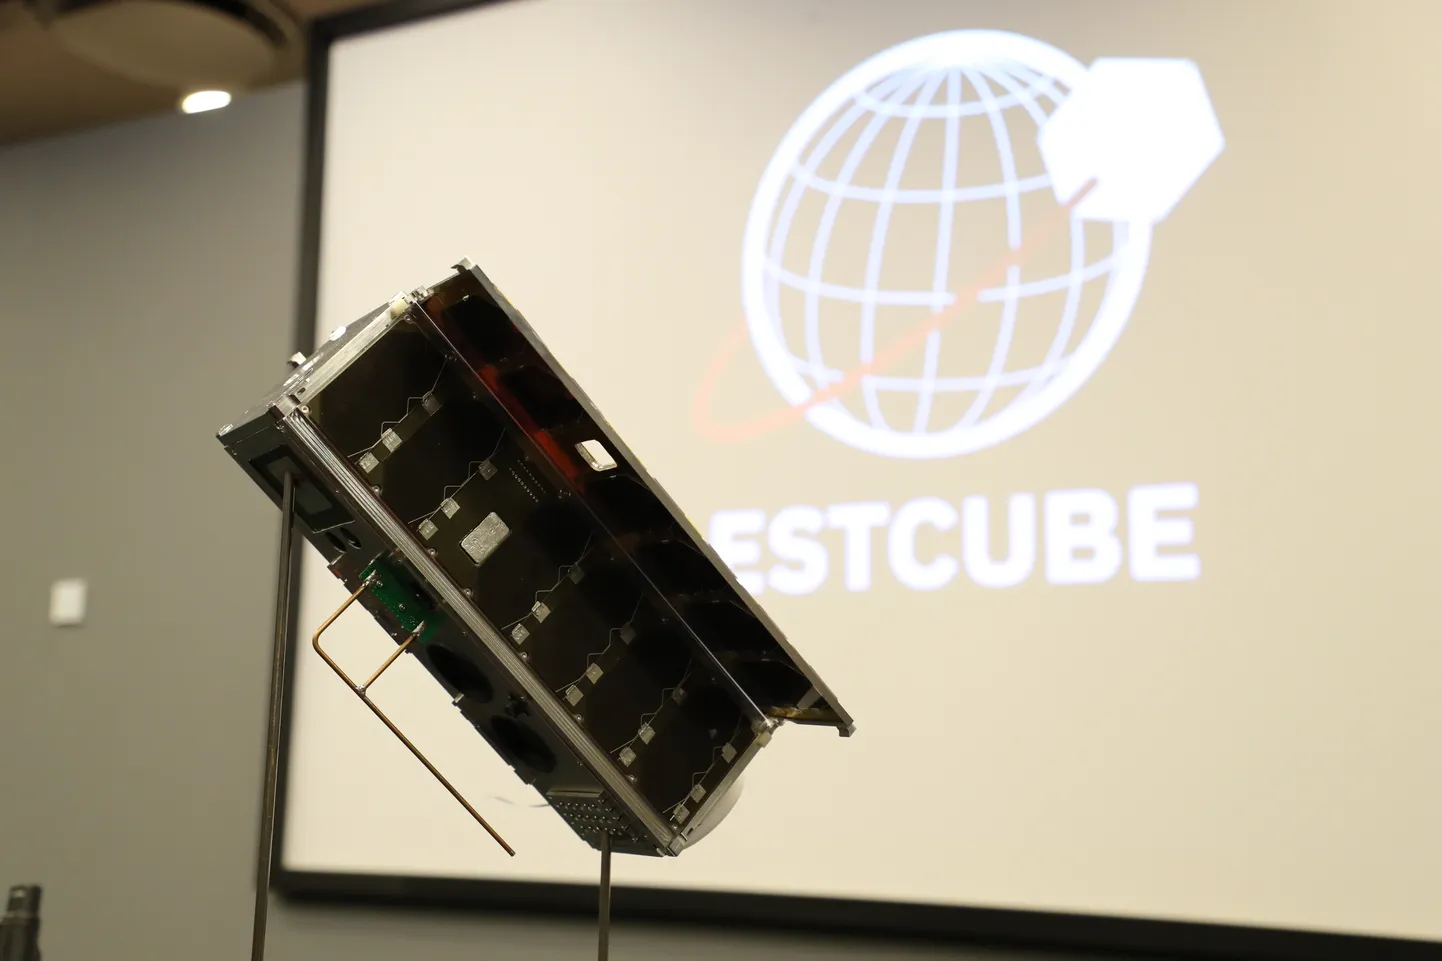 The Estcube-2 satellite.